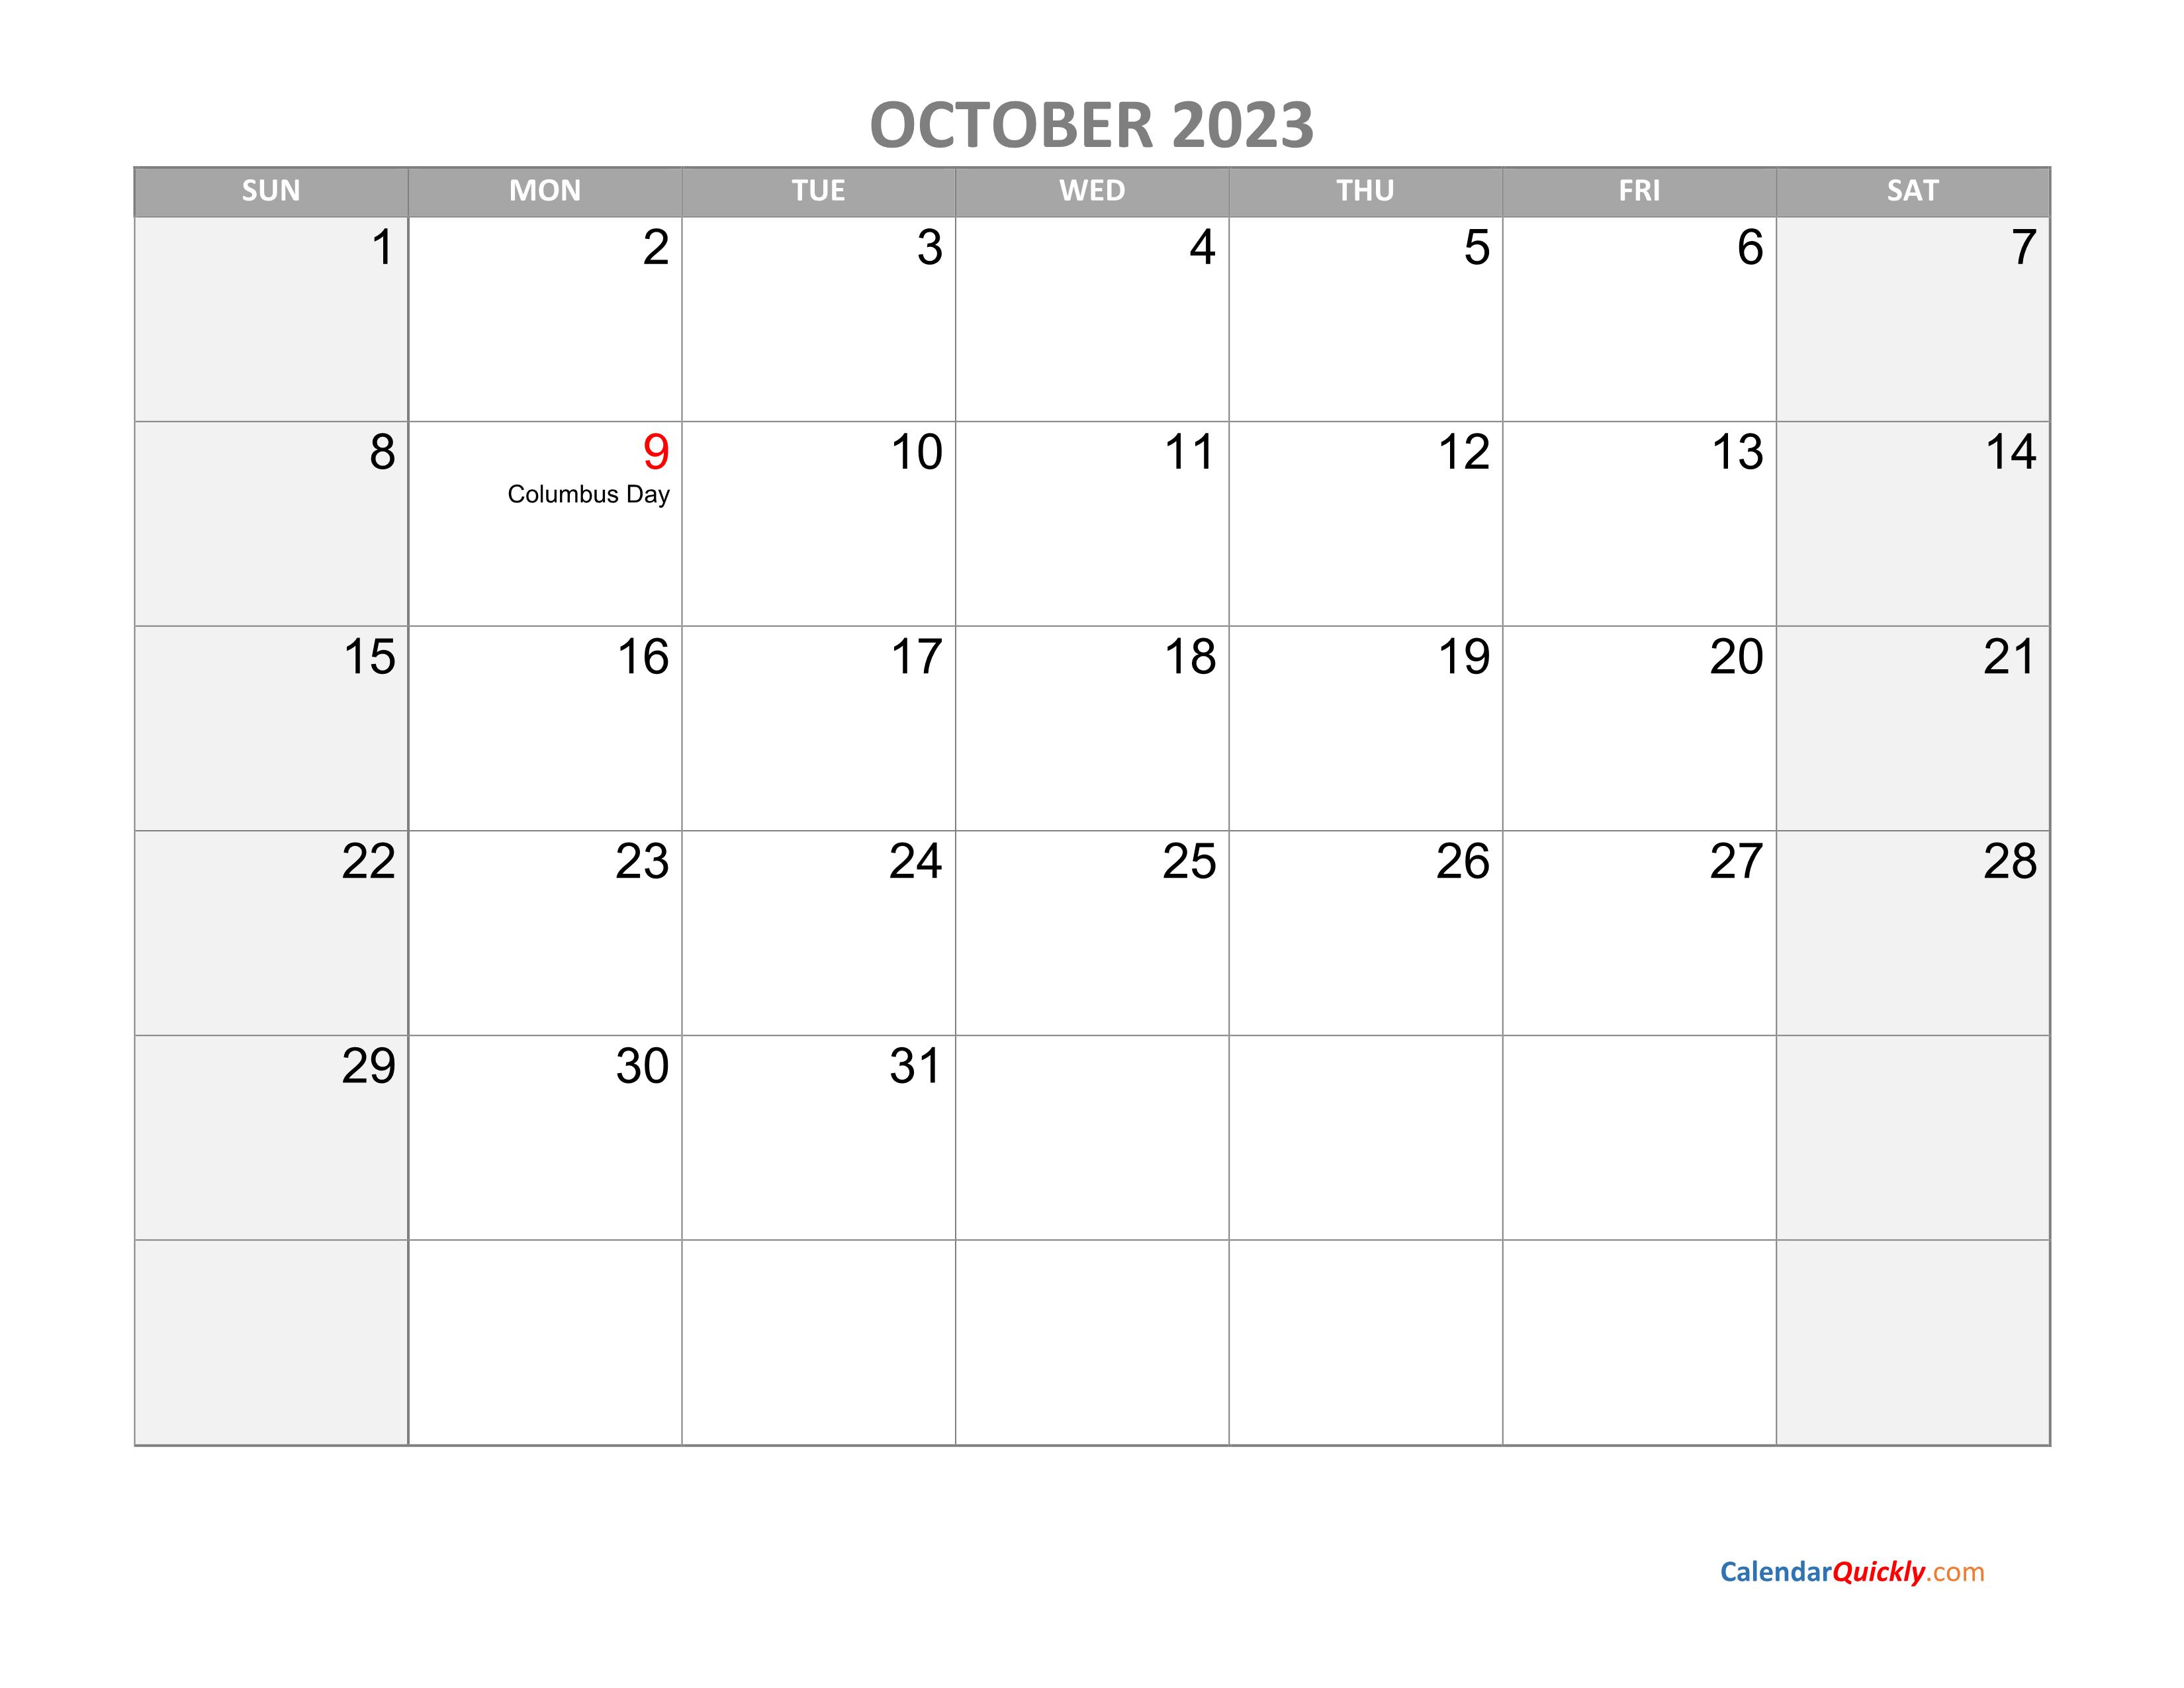 october-calendar-2023-with-holidays-calendar-quickly